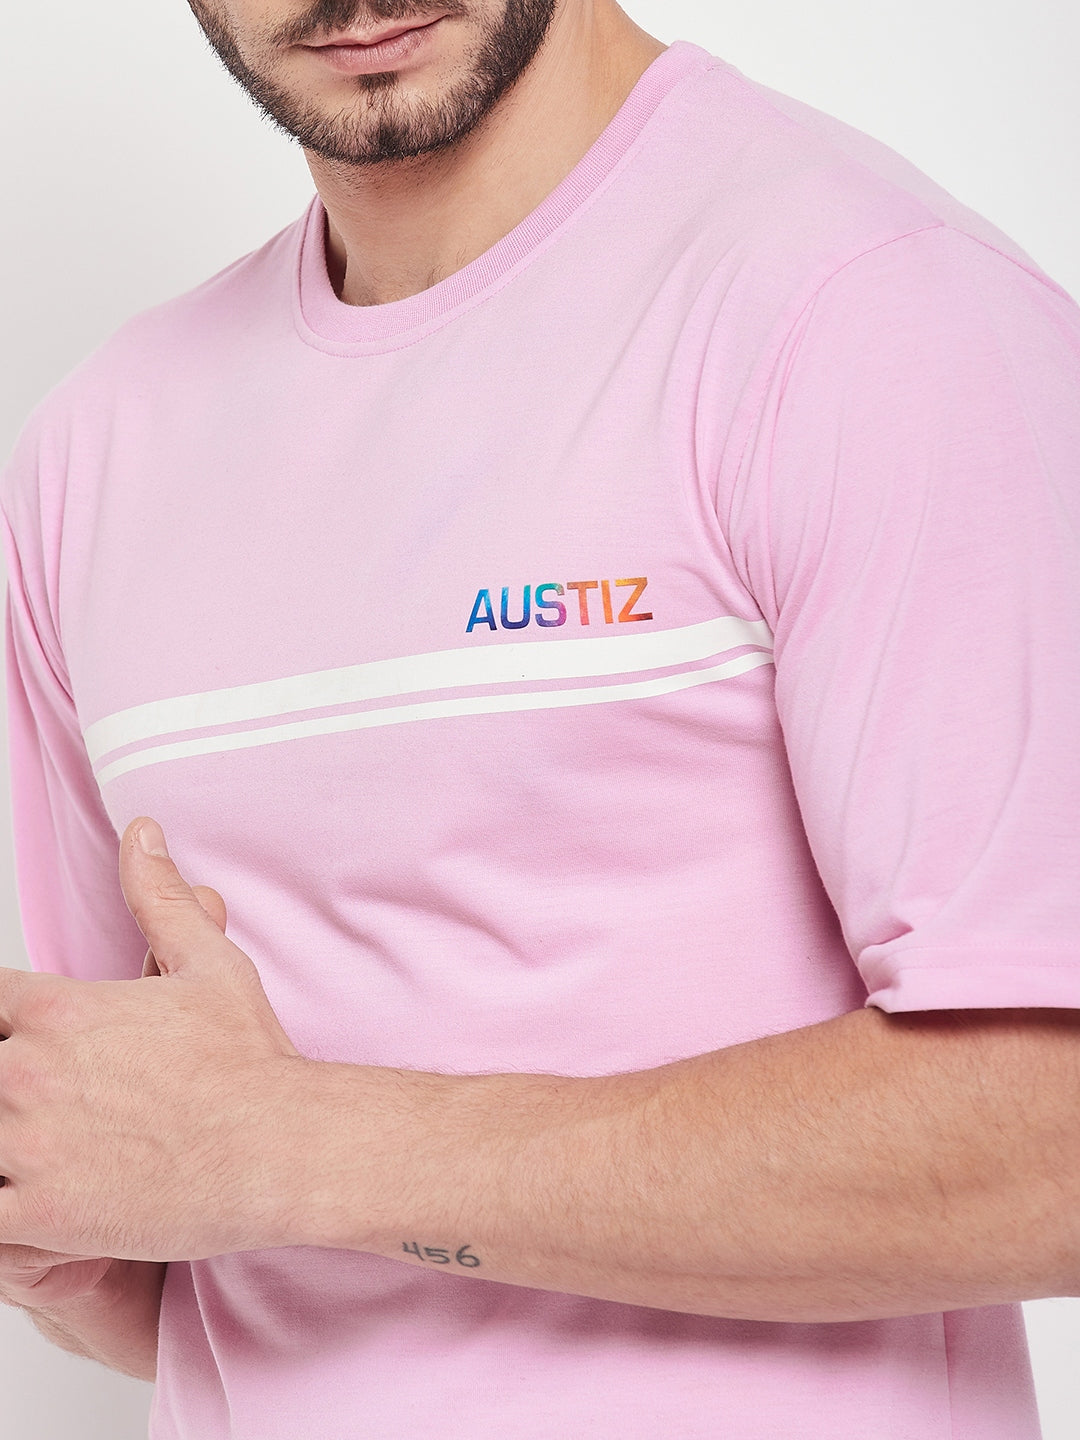 Austiz Men's Funky T -shirt